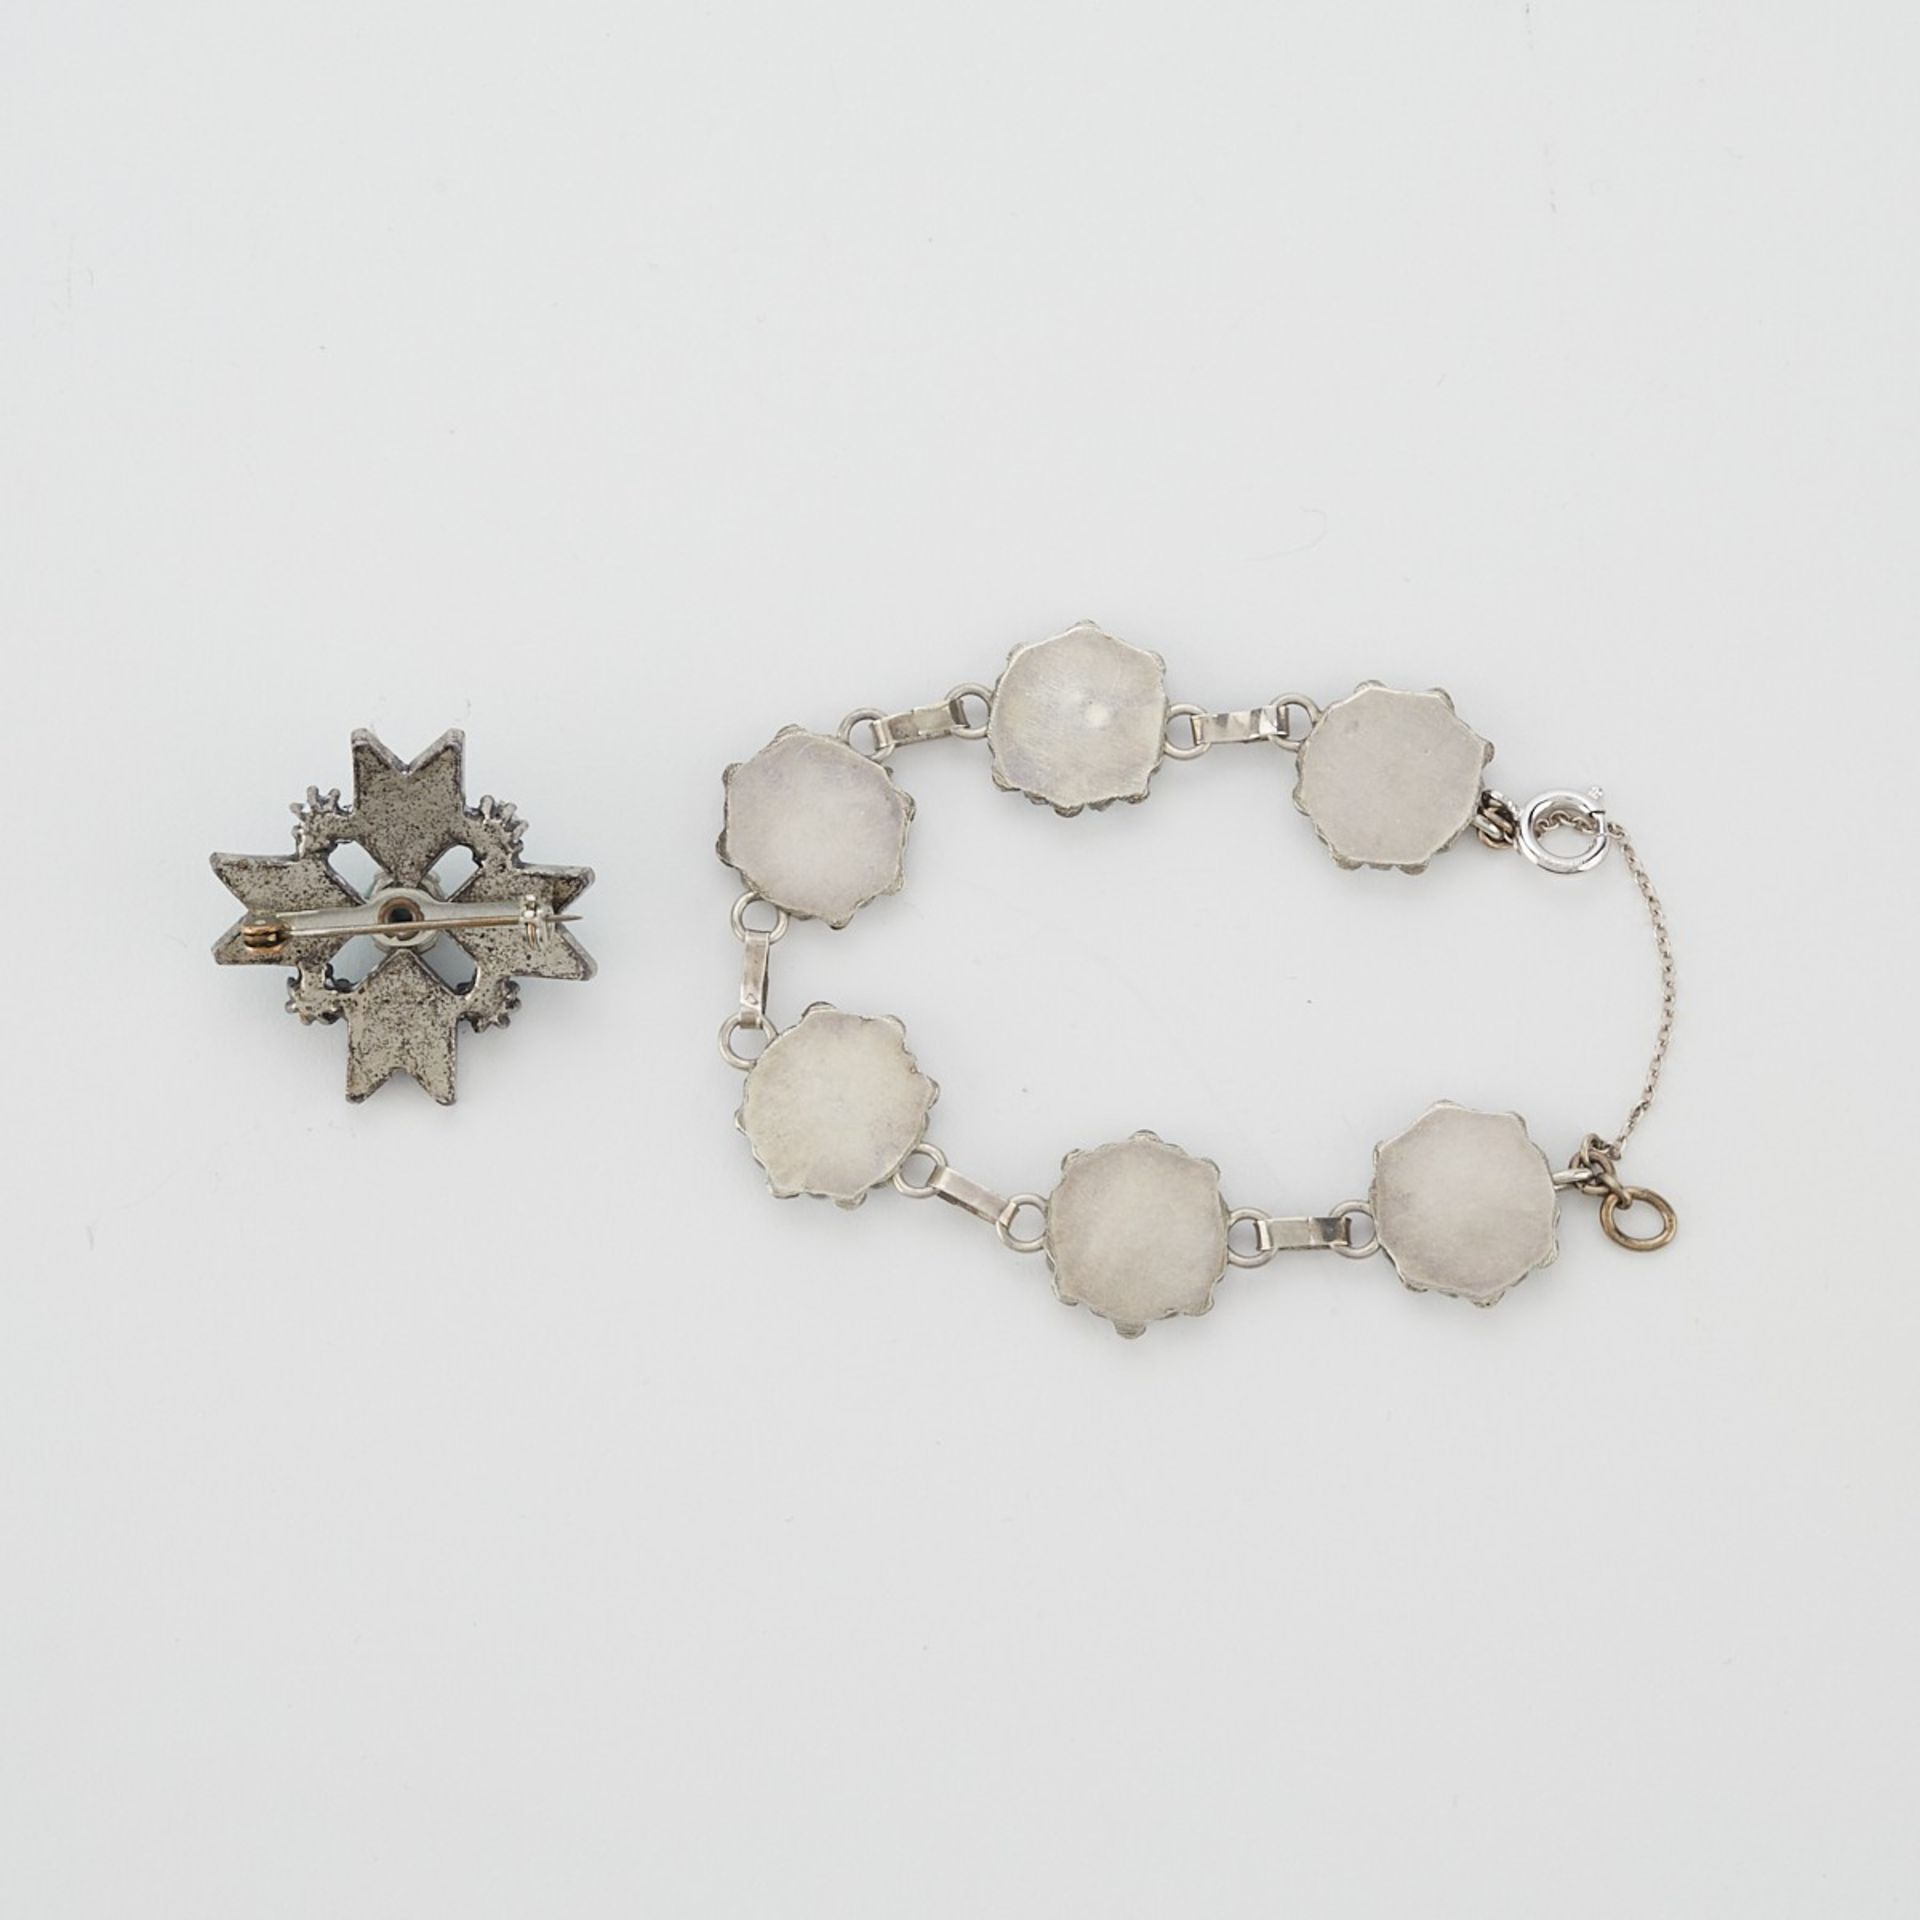 6 Southwest Turquoise Jewelry Rings, Pin, Bracelet - Image 4 of 16